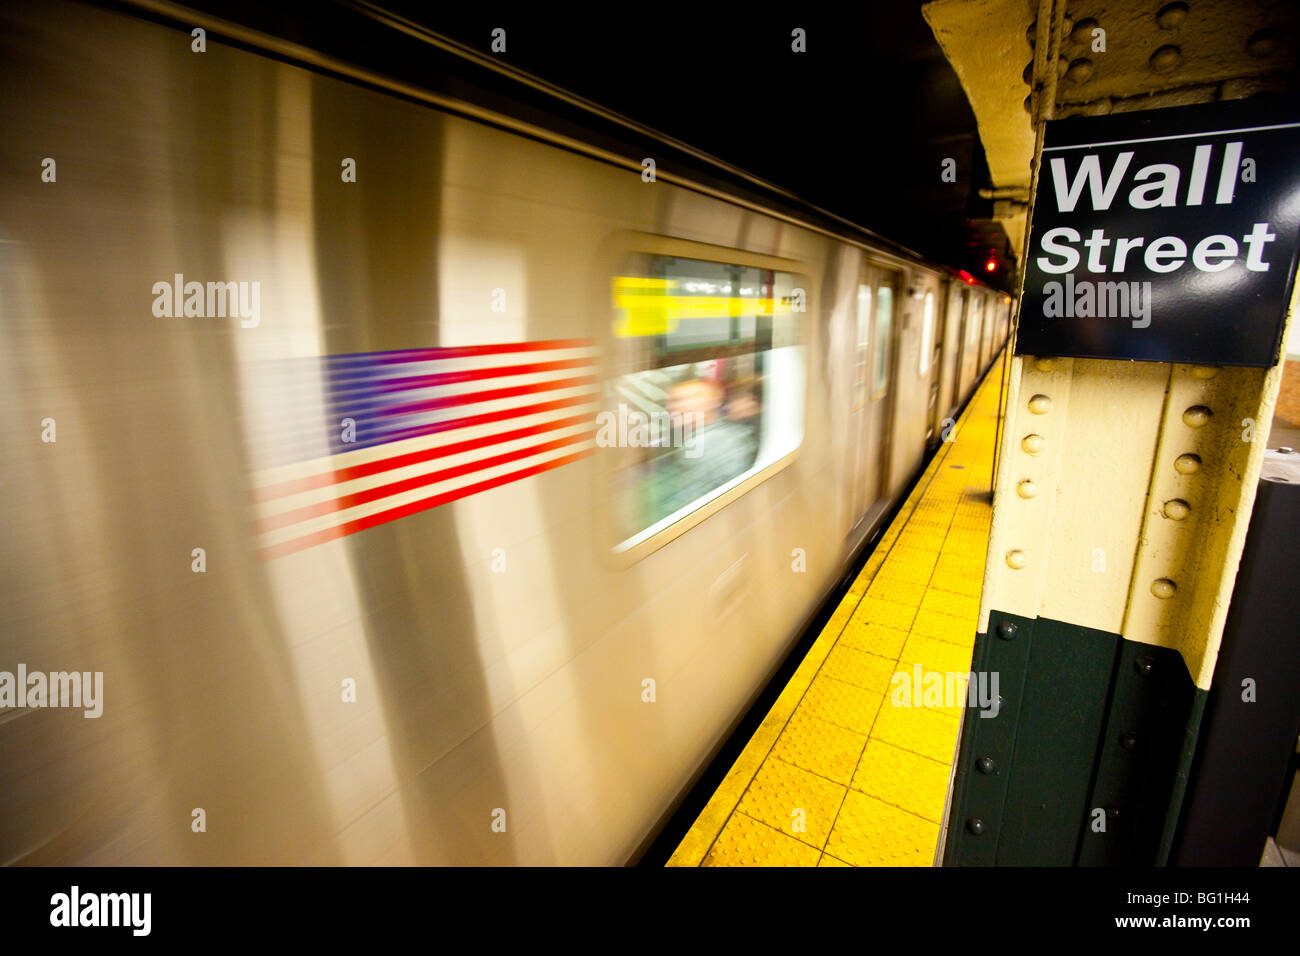 Wall Street Station Subway Platform in Manhattan, New York City Stock Photo